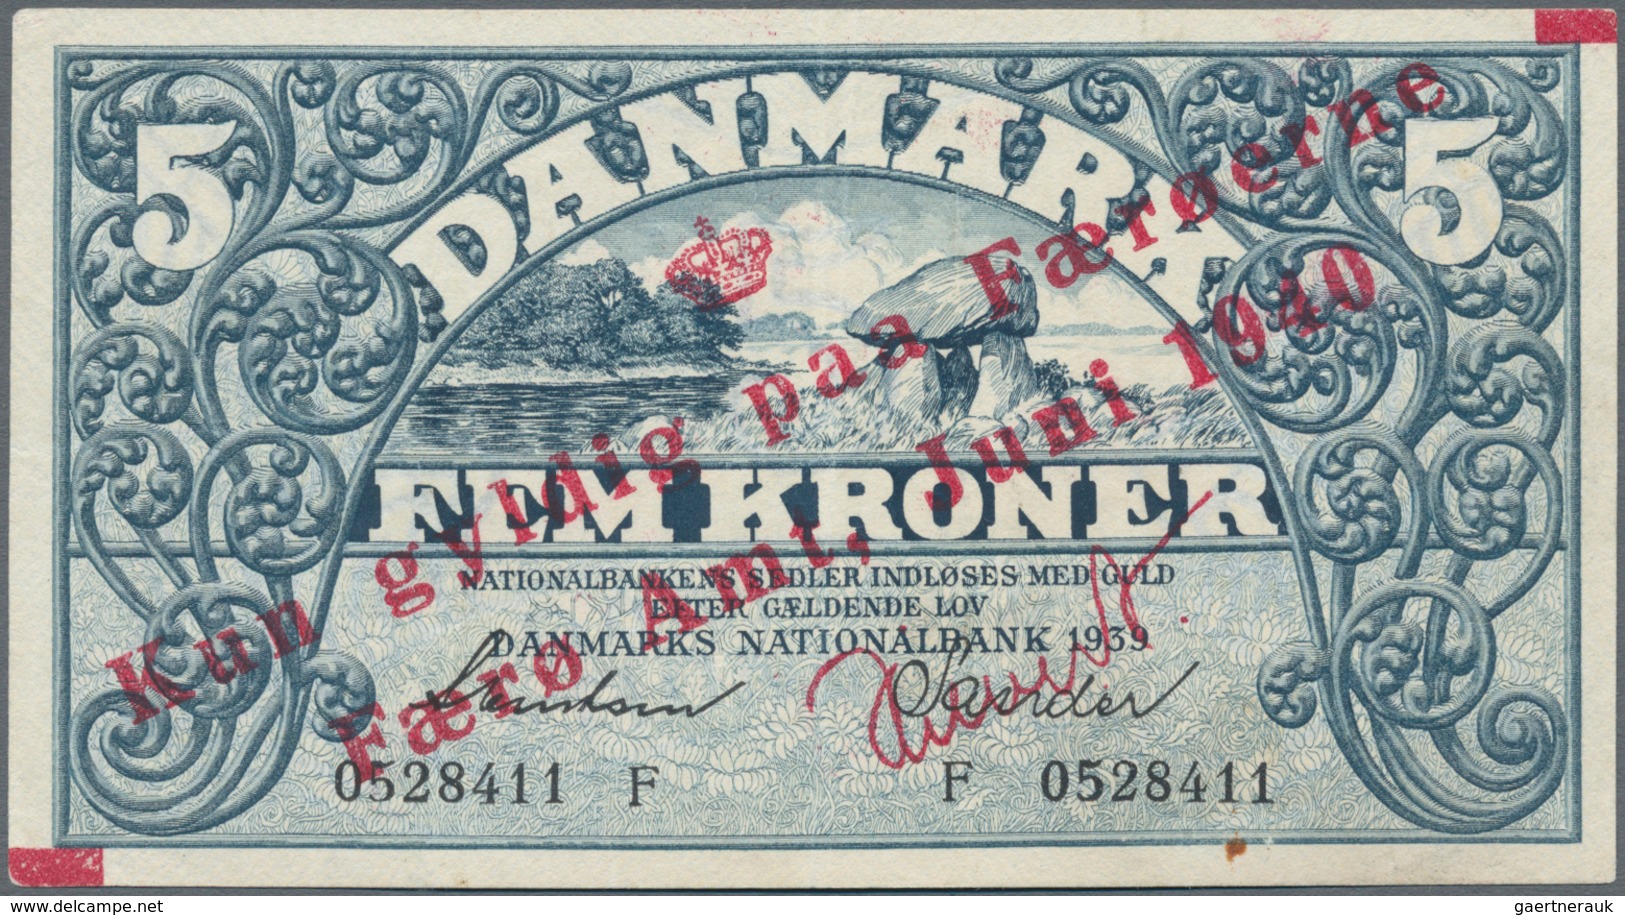 Faeroe Islands / Färöer: 1 Kroner 1940 Overprint On Denmark #30c, P.1b, Vertical Center Fold And Tin - Faeroër